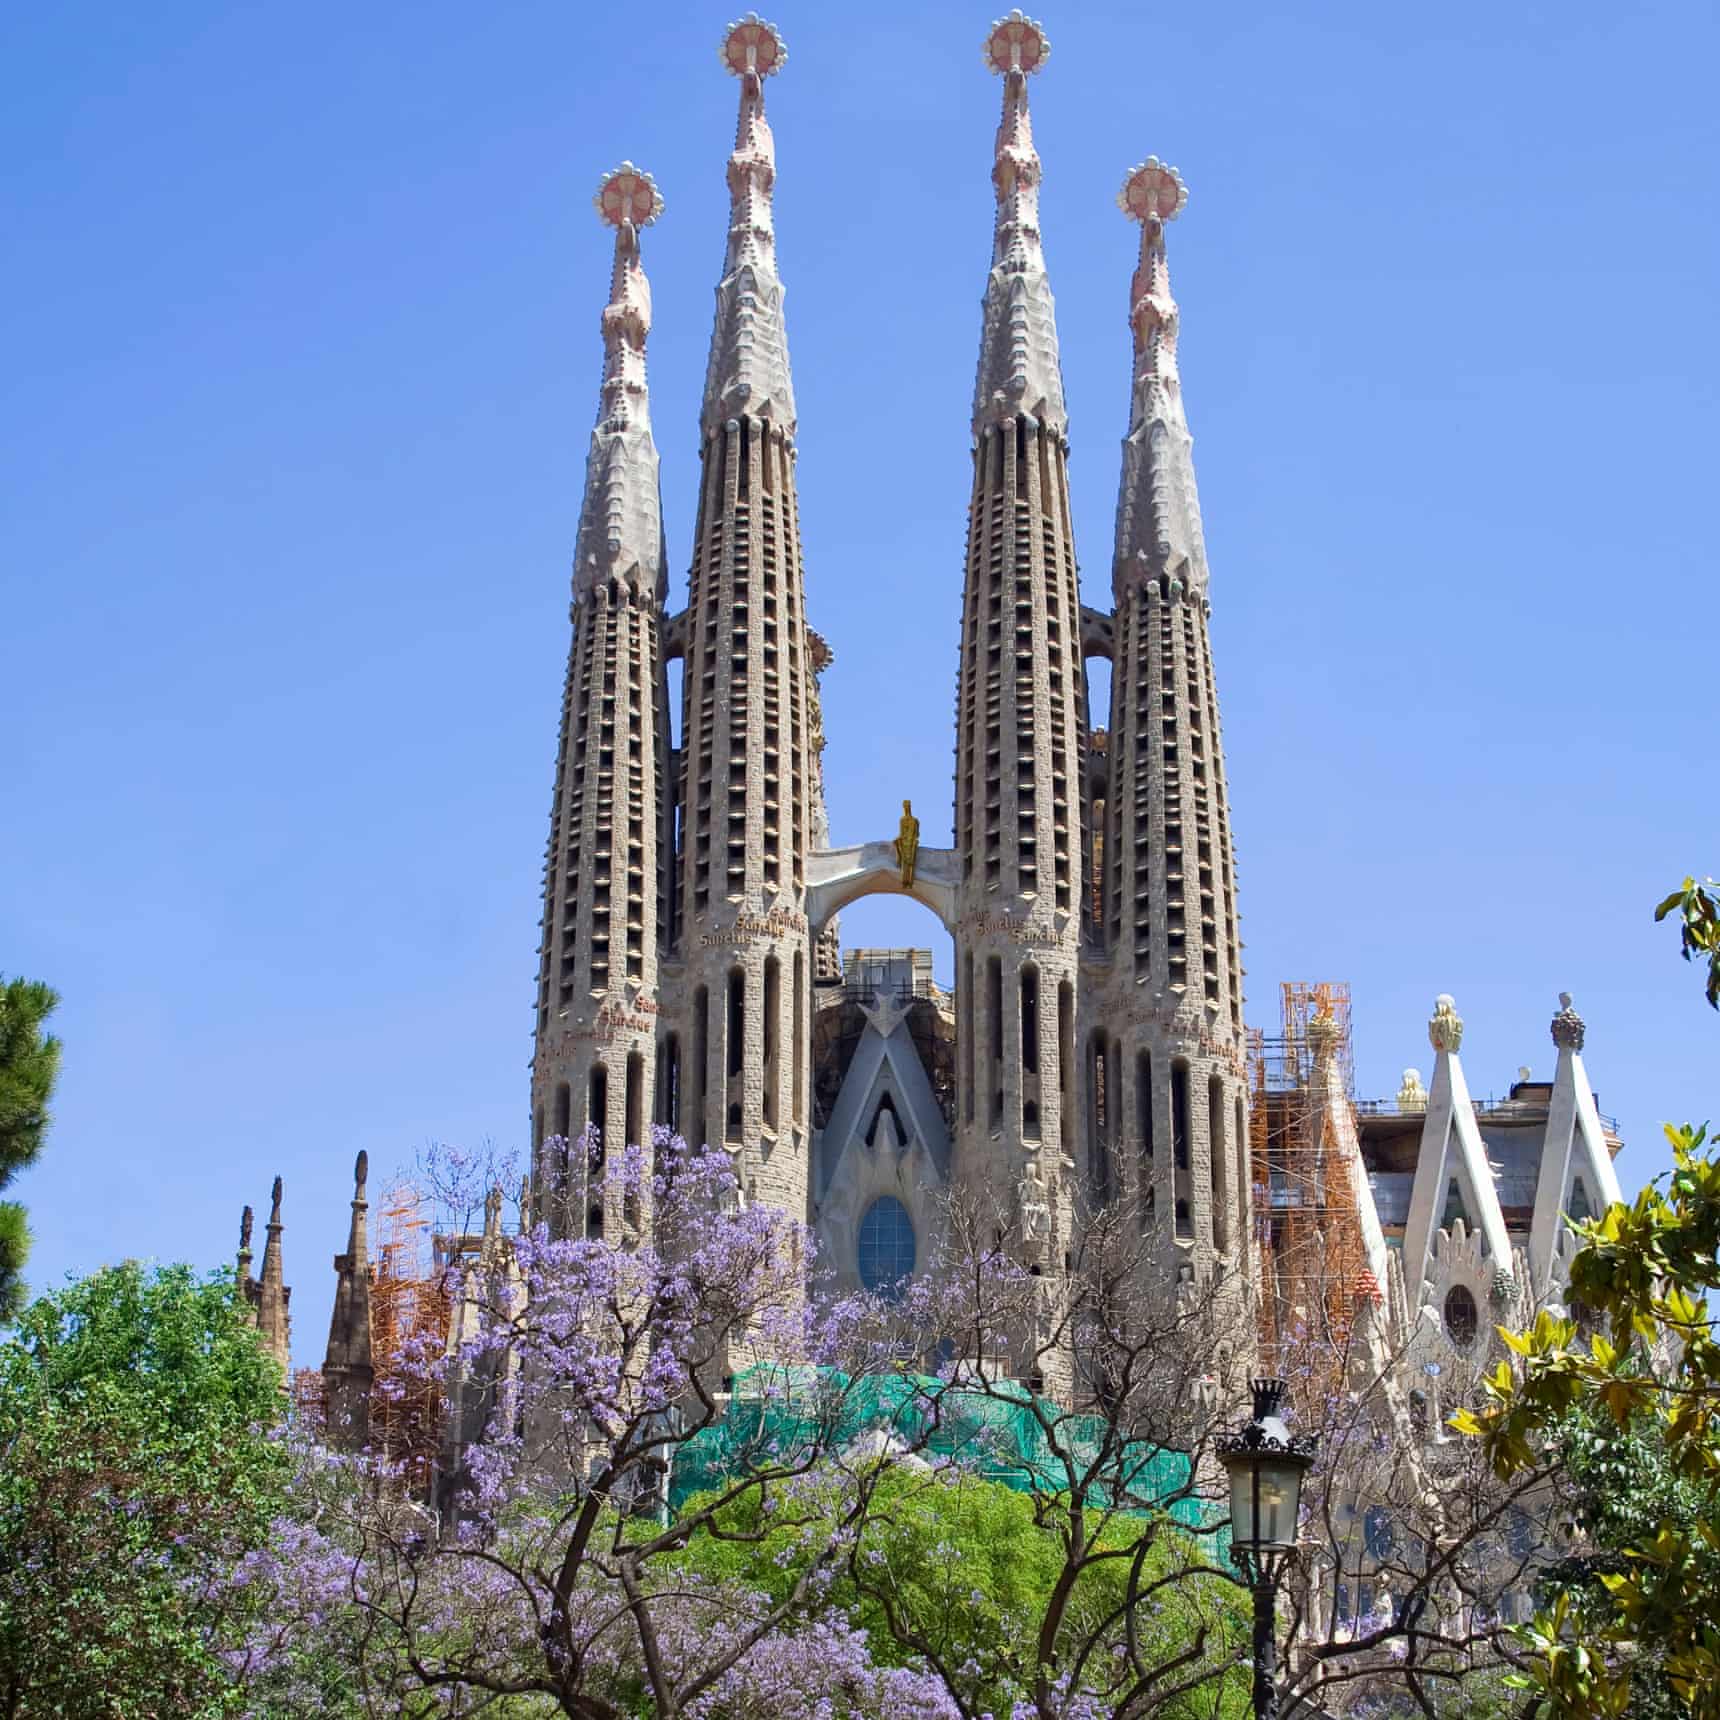 A landmark in Spain - Sagrada Familia